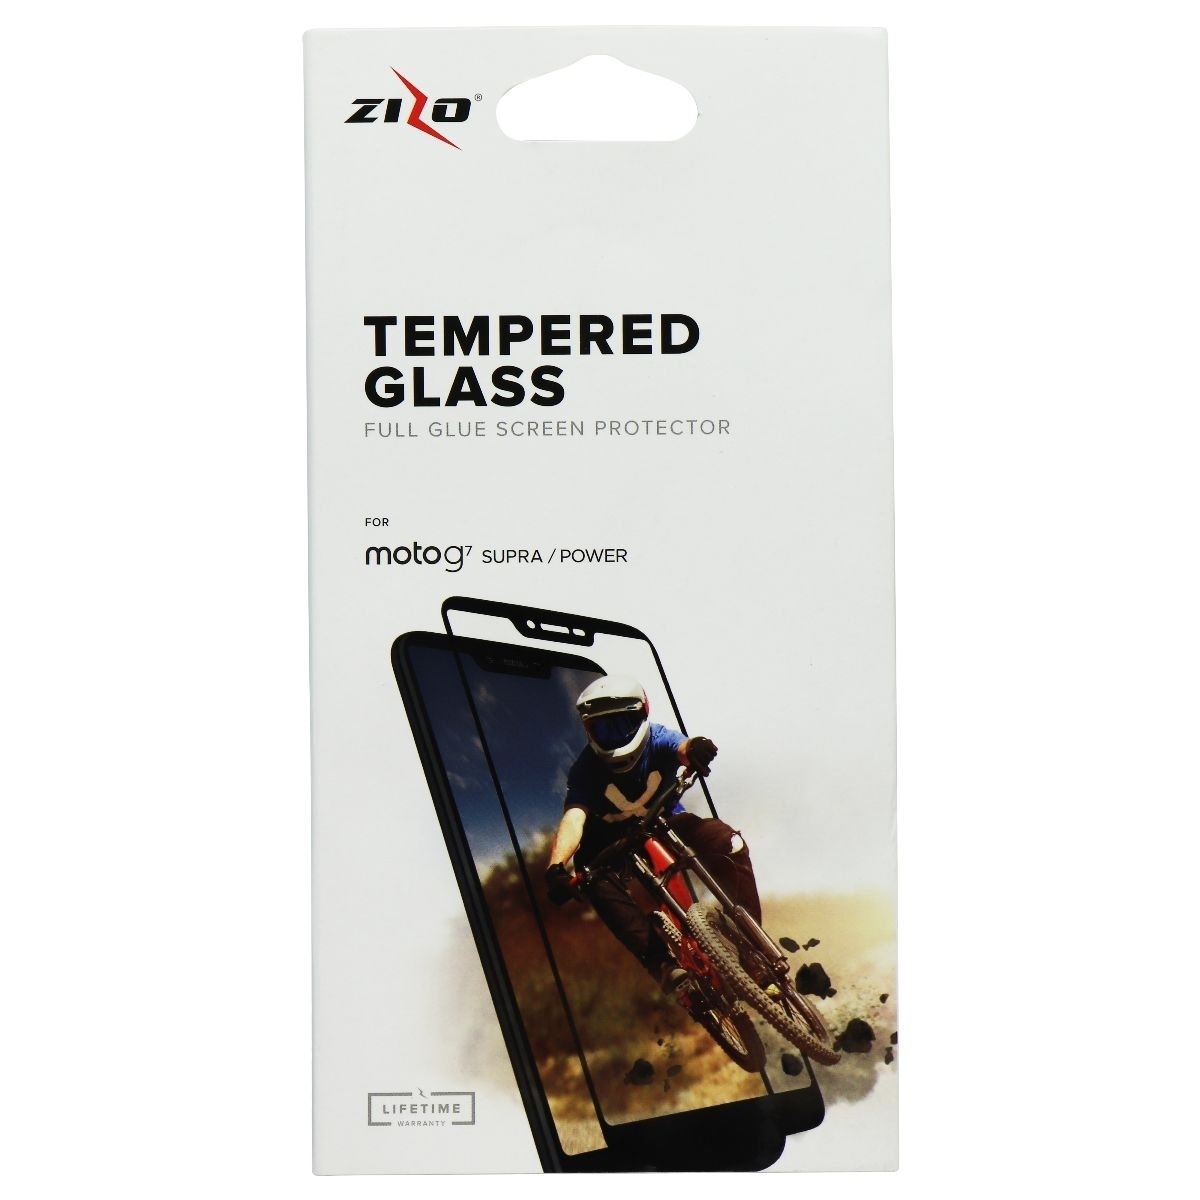 Zizo Tempered Glass Screen Protector For Motorola Moto G7 Supra / Power - Clear (Refurbished)